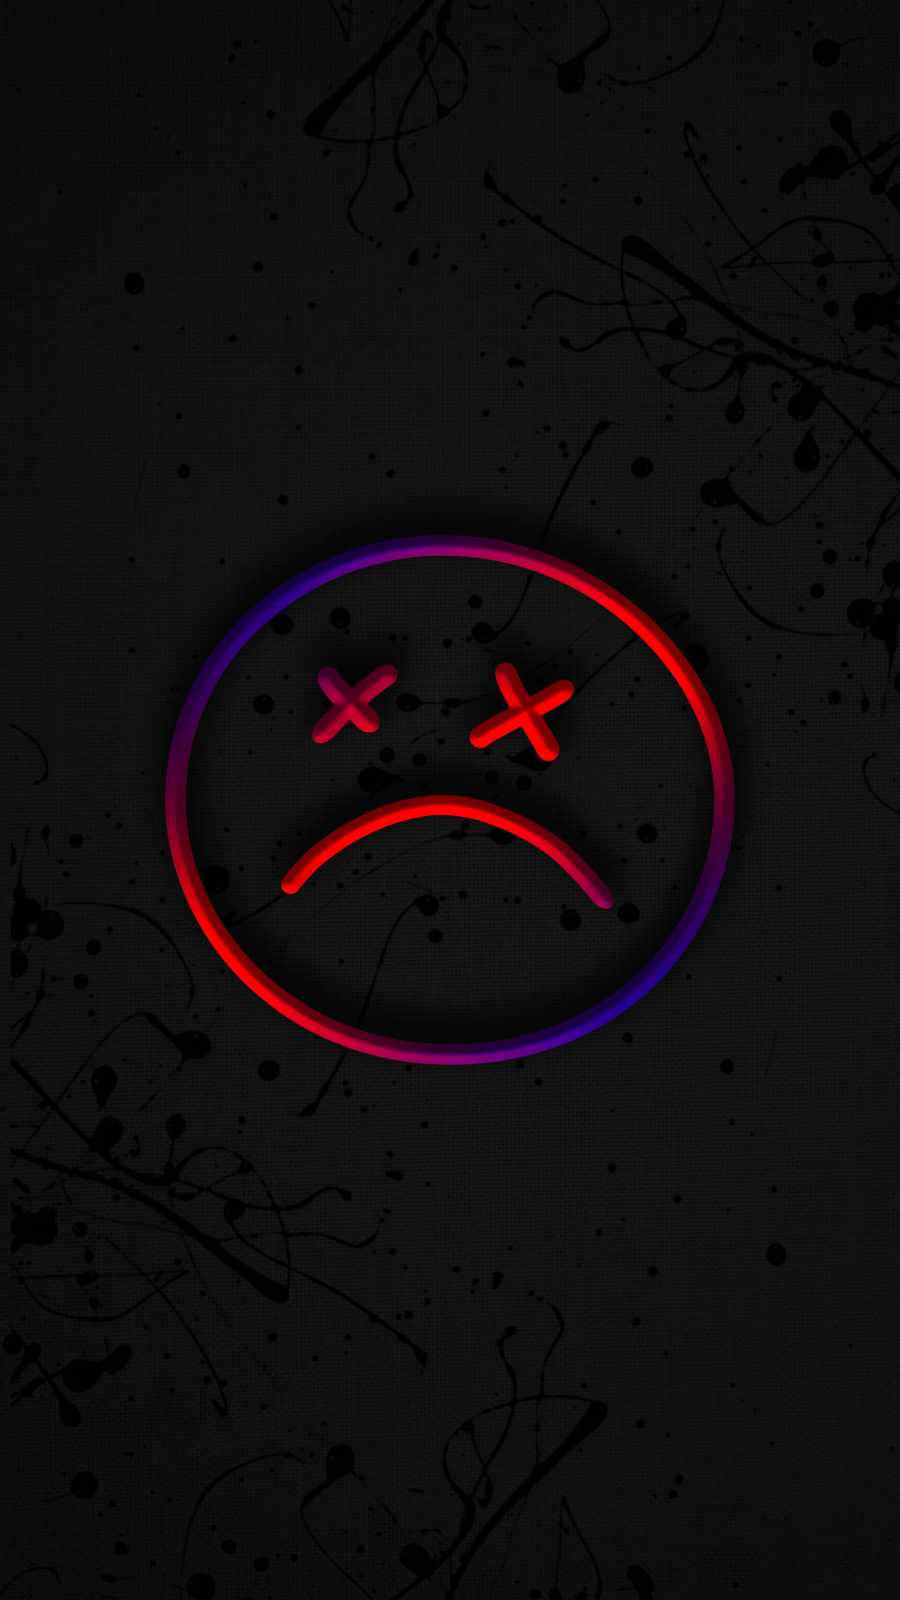 Sad emoji wallpaper by FadedLilly06  Download on ZEDGE  8fd5